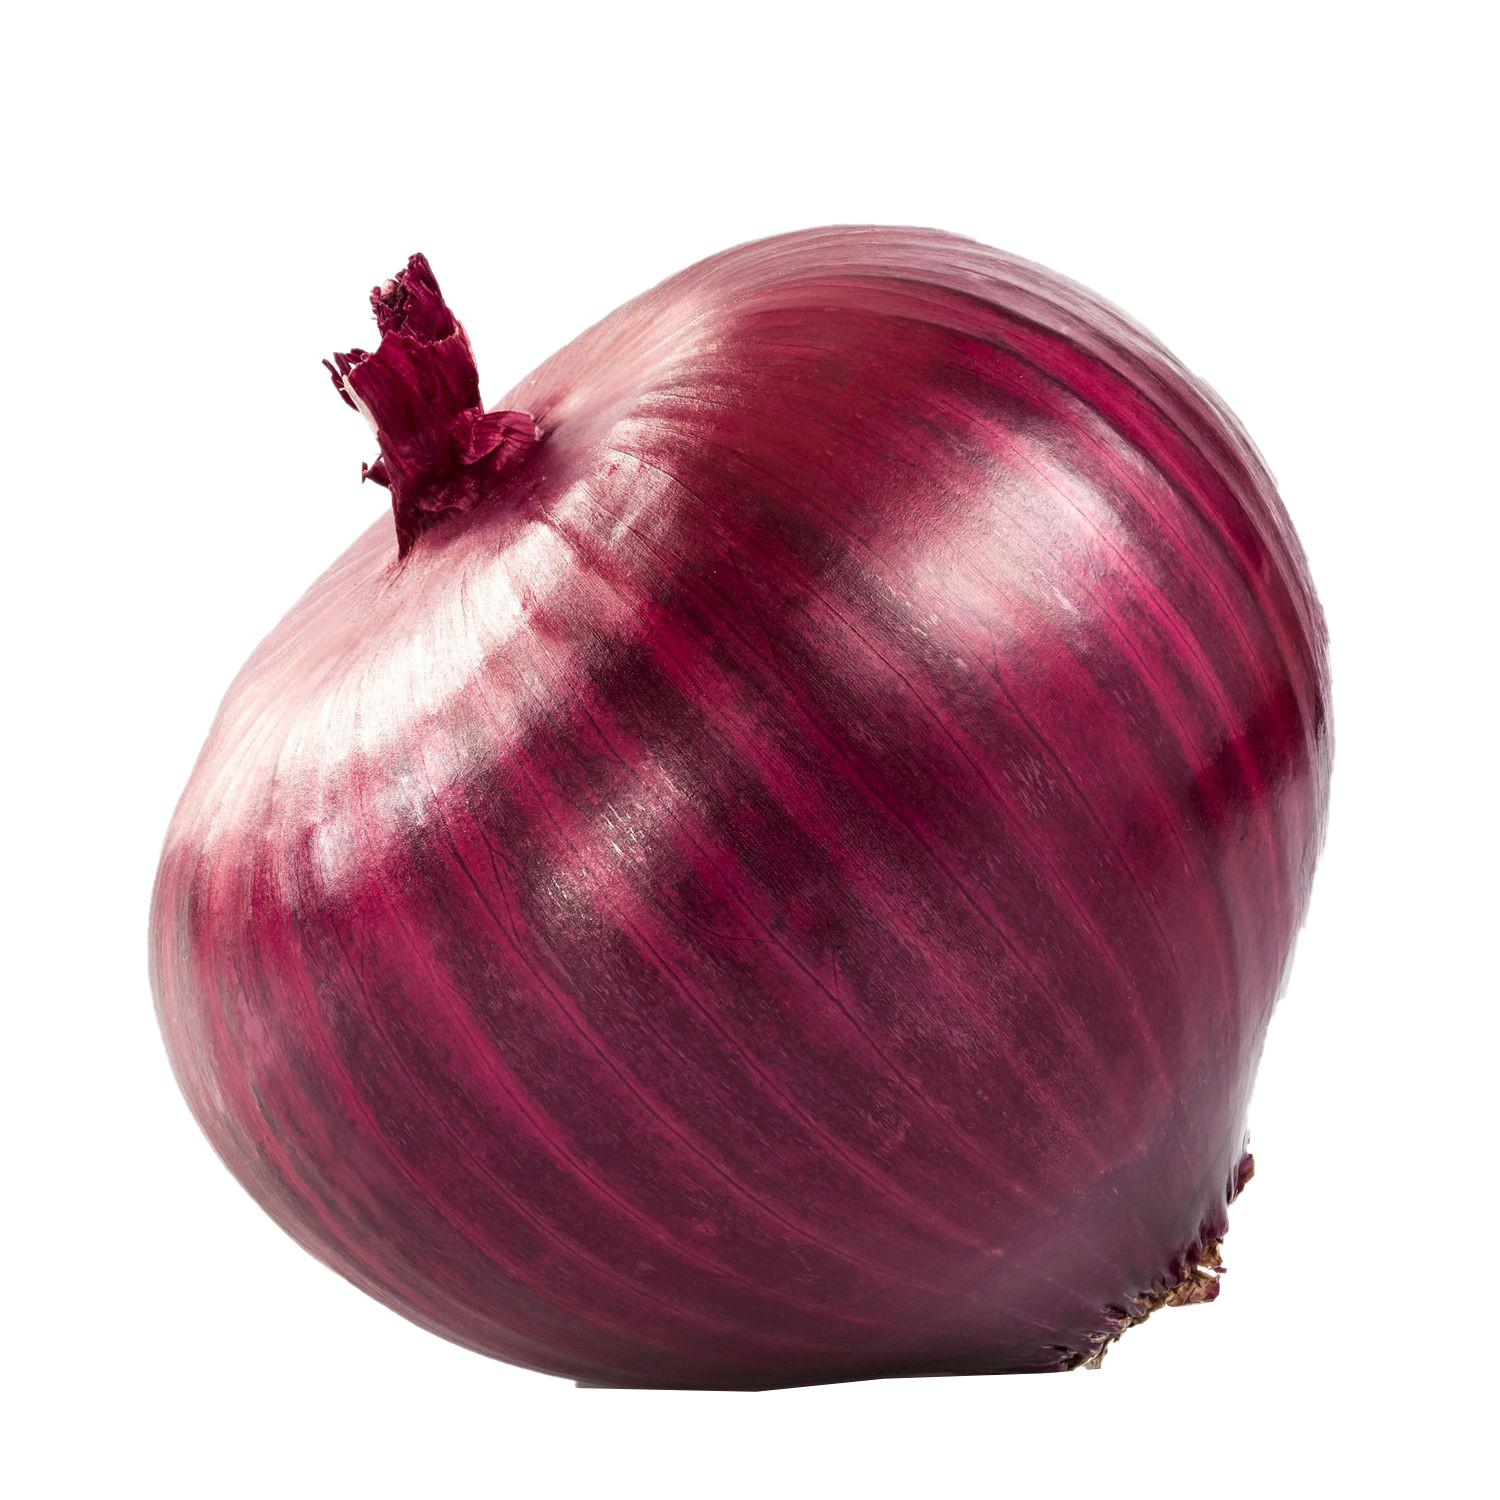 Onion Transparent Background